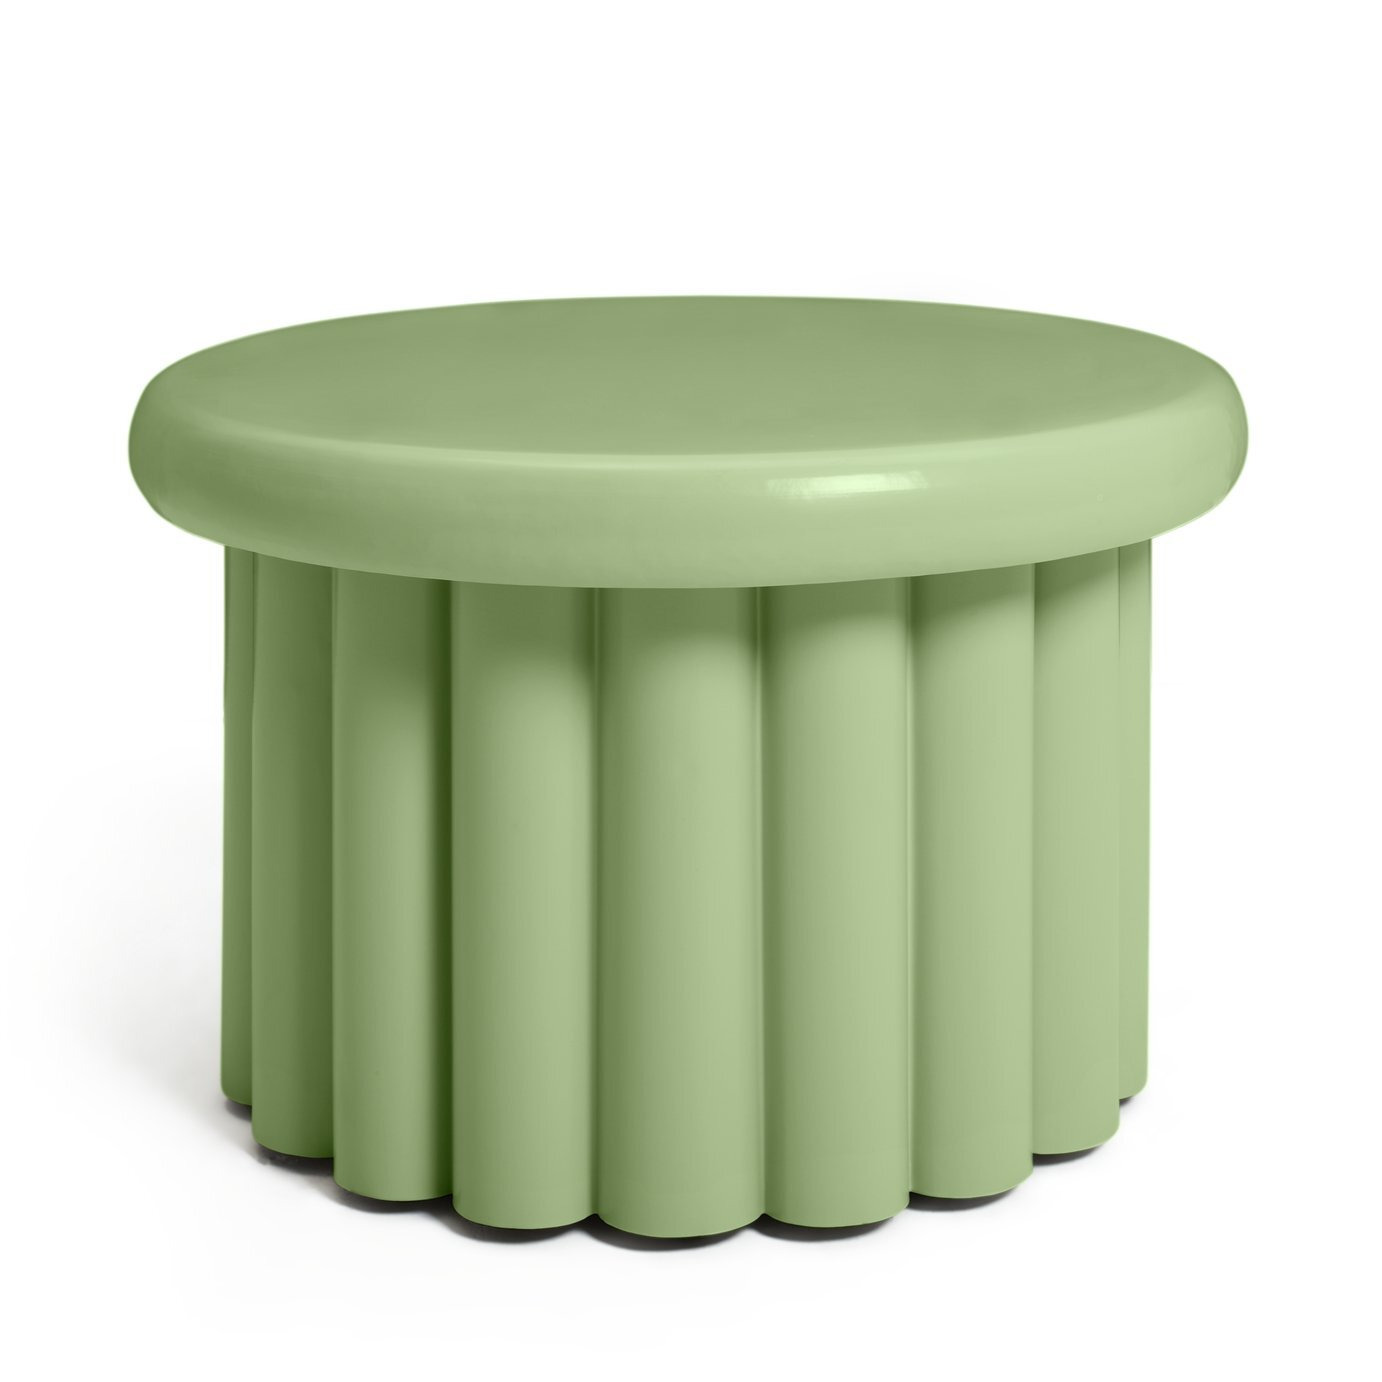 Habitat Studio Round Coffee Table - Green - image 1